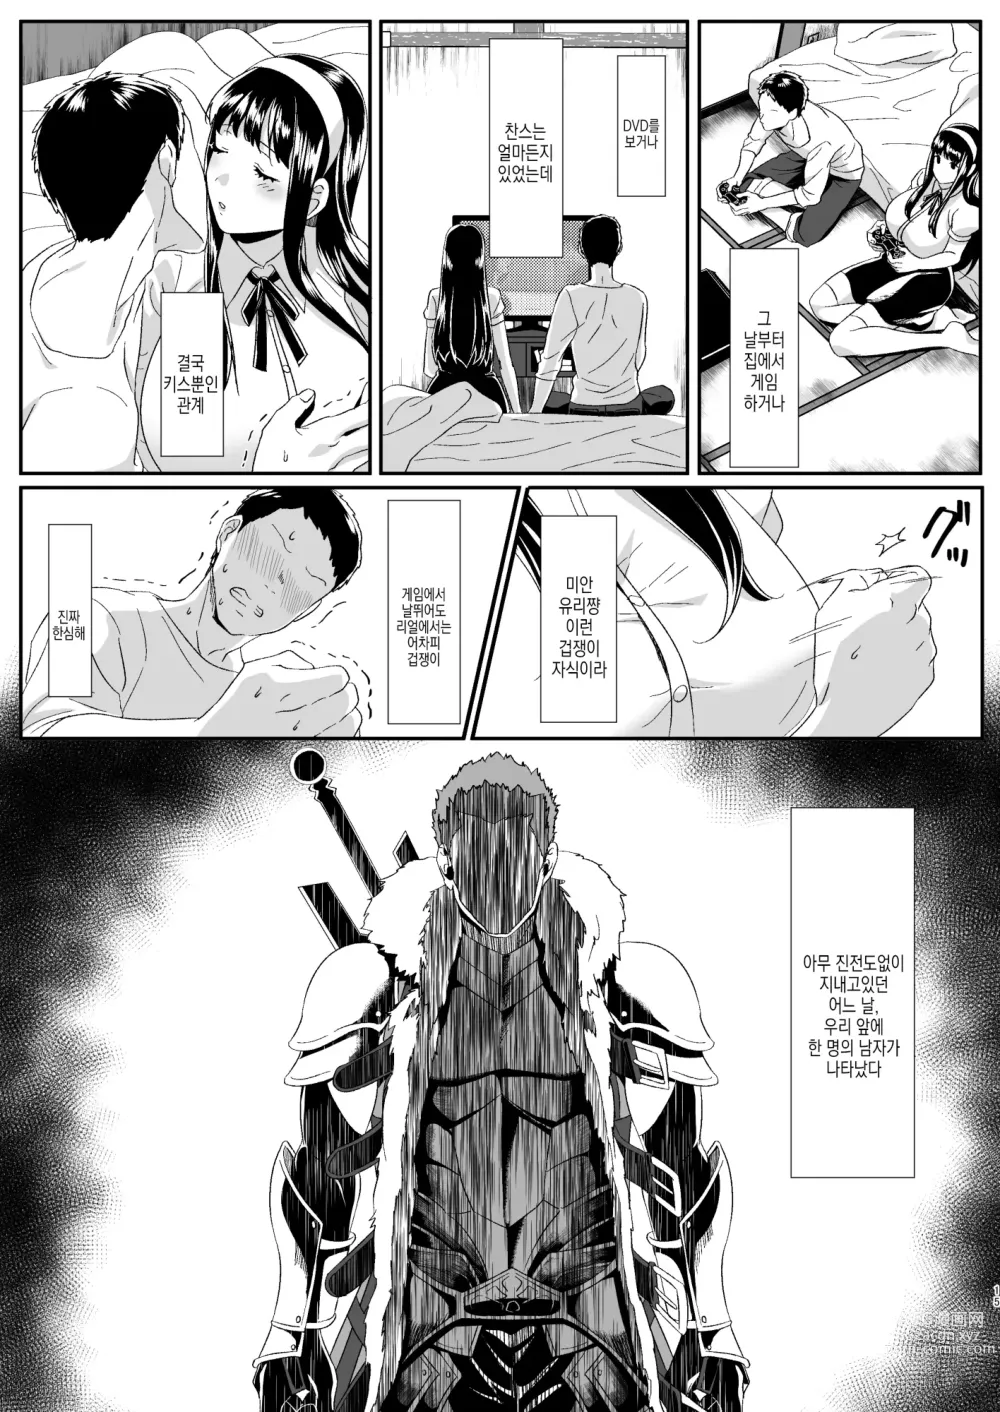 Page 16 of doujinshi 온라인 게임에서 만난 여친이 고렙한테 네토라레당하는 이야기